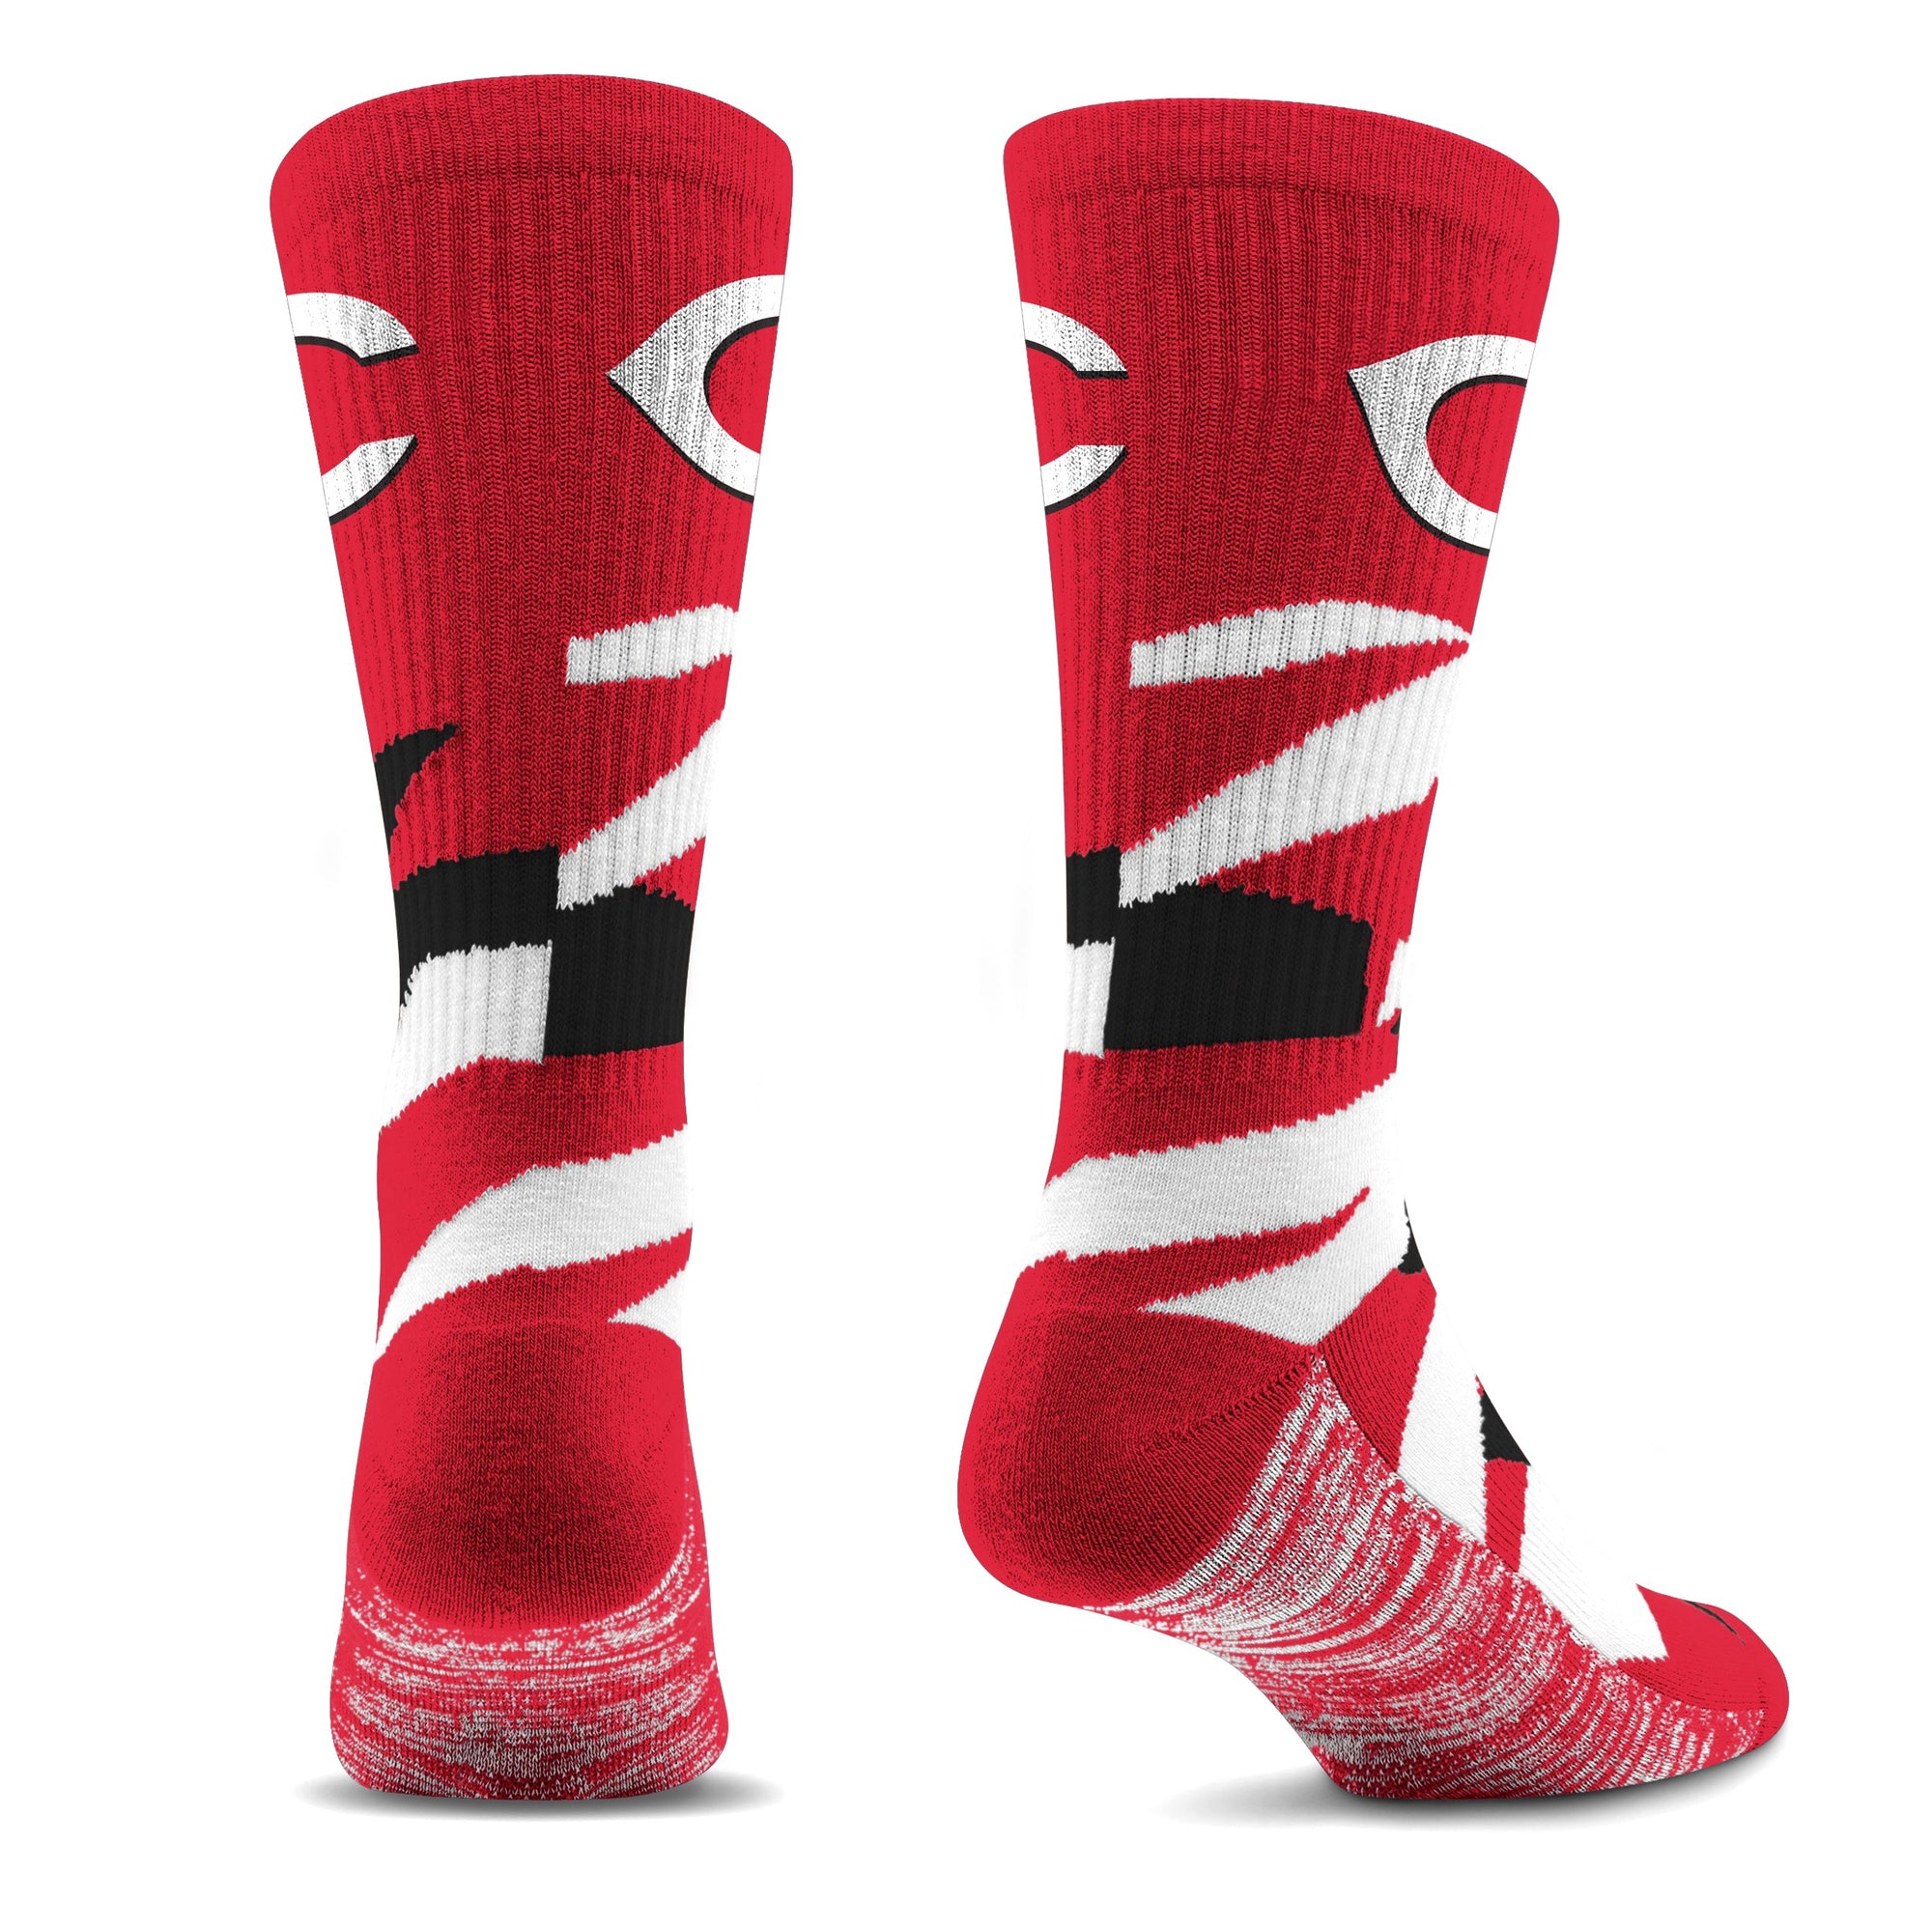 Cincinnati Reds Breakout Premium Crew Socks